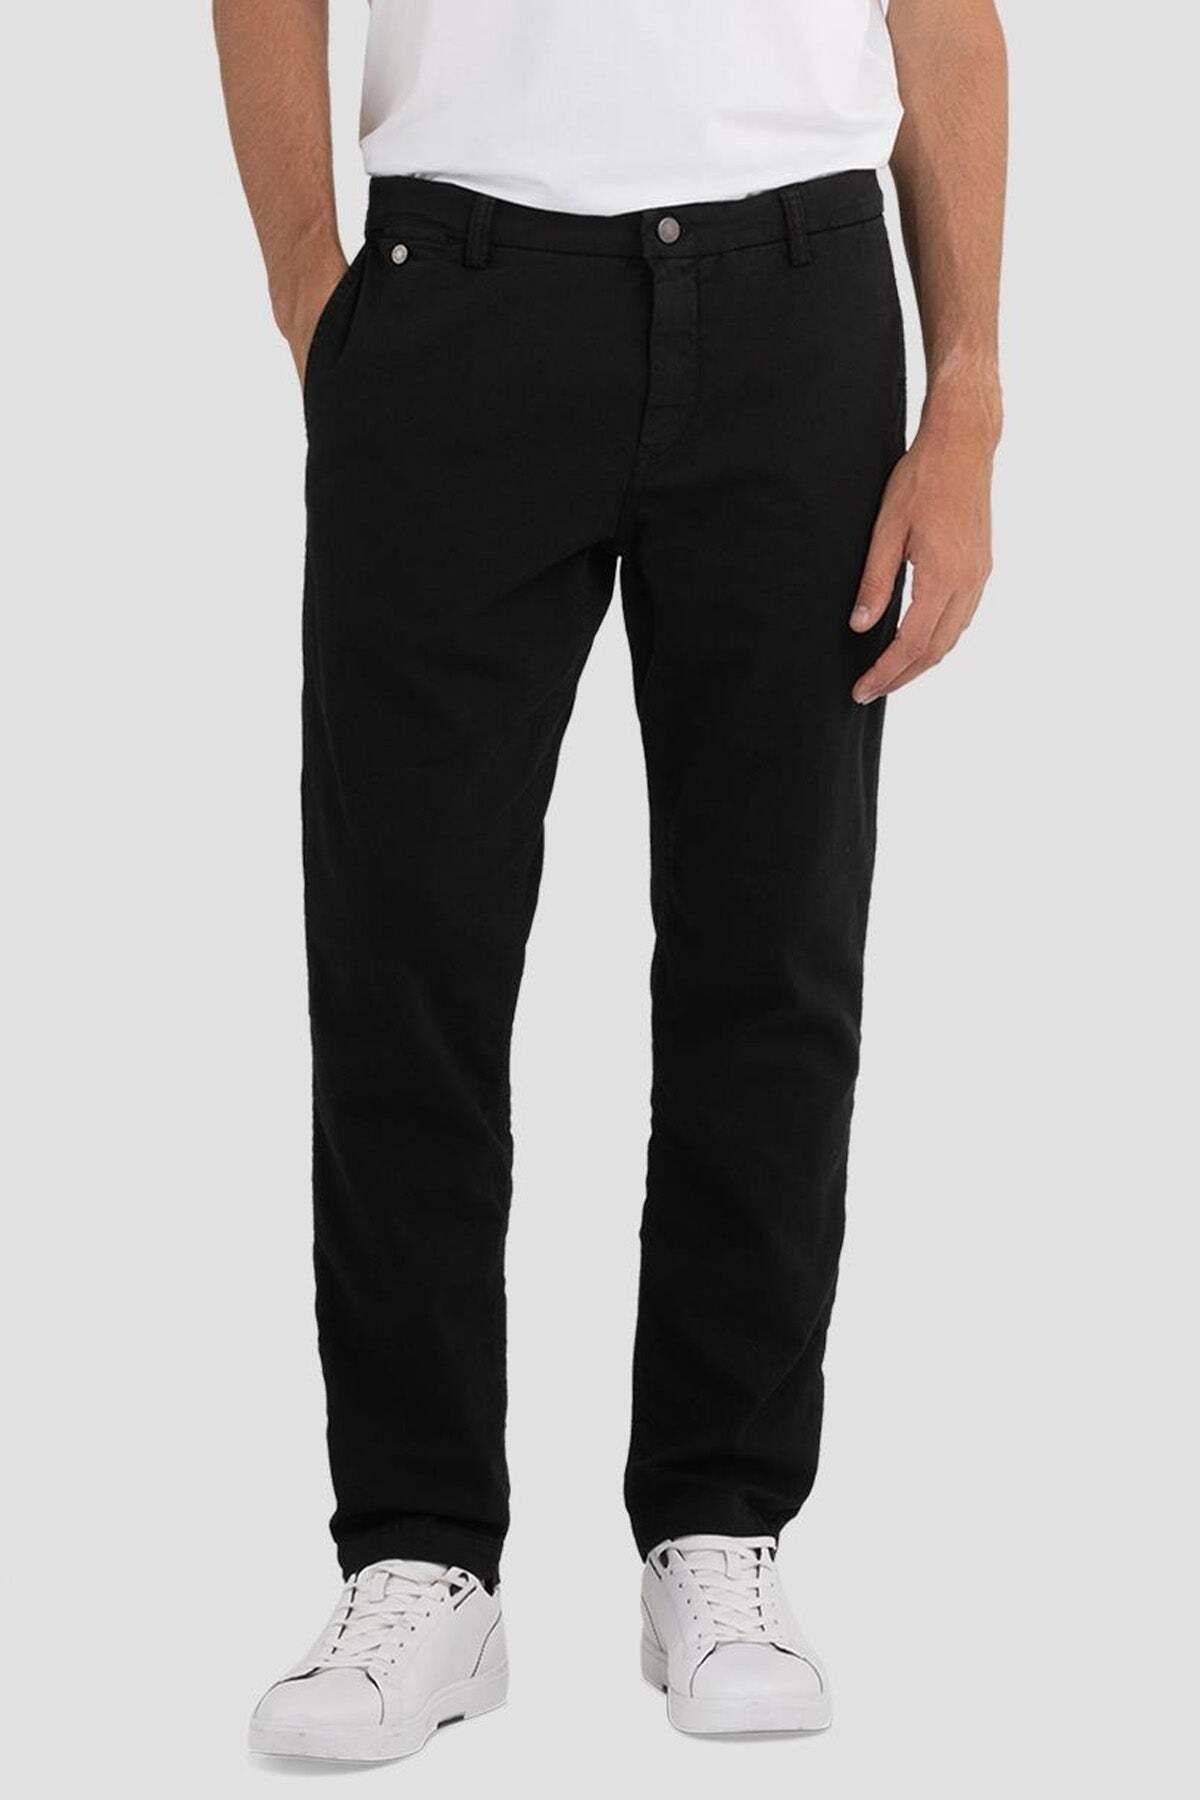 Replay Benni Hyperflex Yandan Cepli Regular Fit Pantolon 36 / Siyah